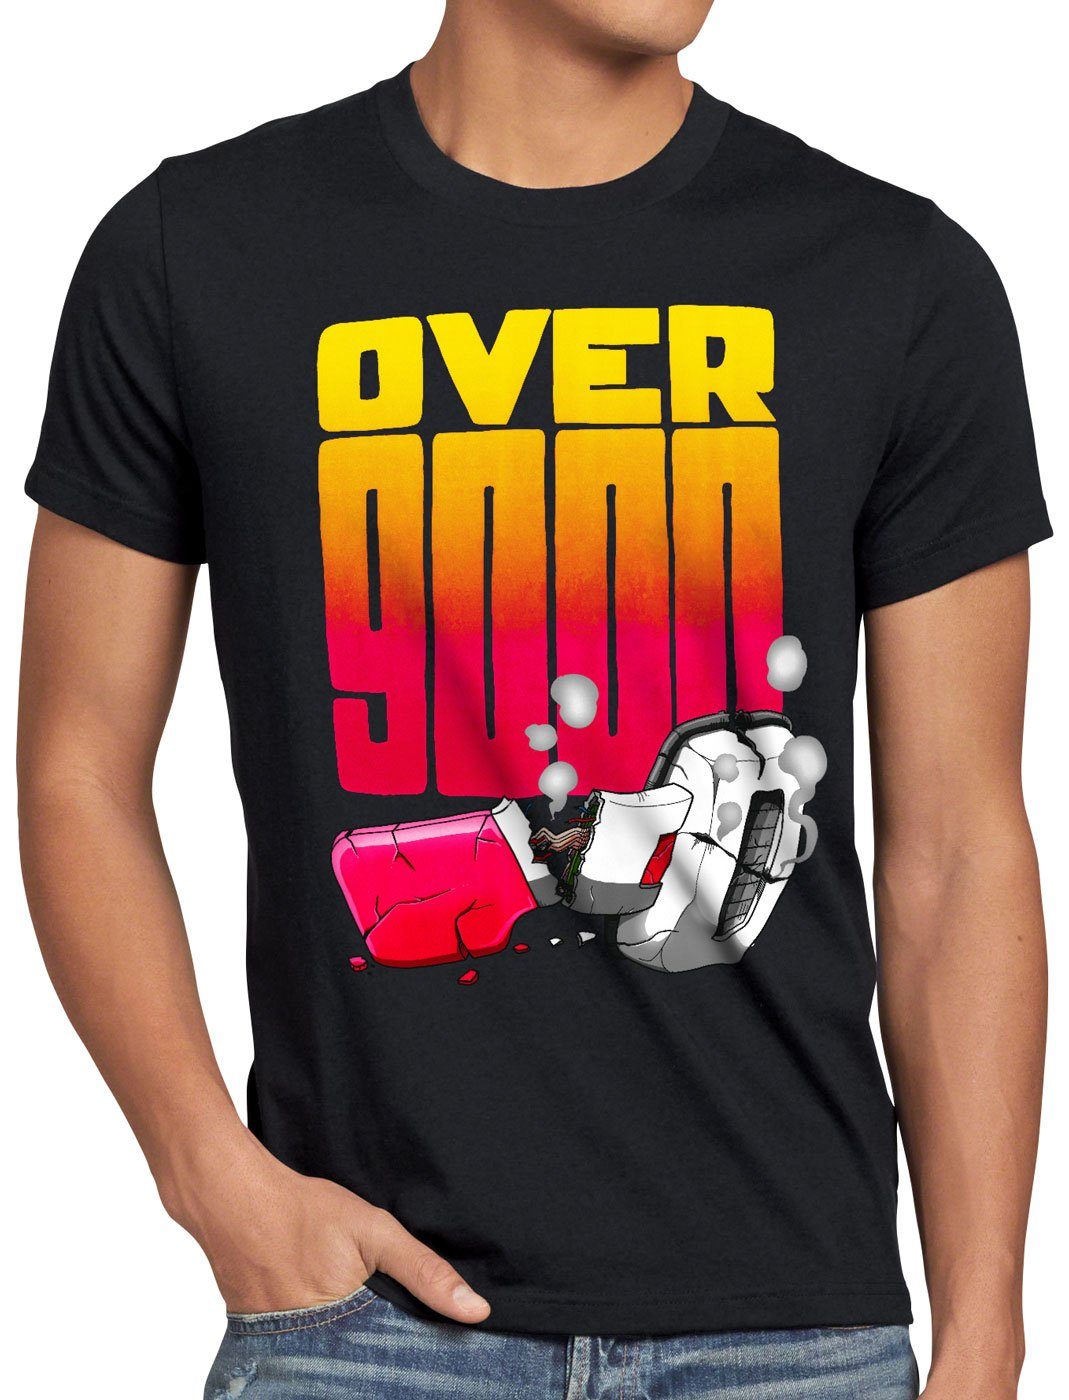 Over vegeta level schwarz Print-Shirt 9000 Herren power T-Shirt style3